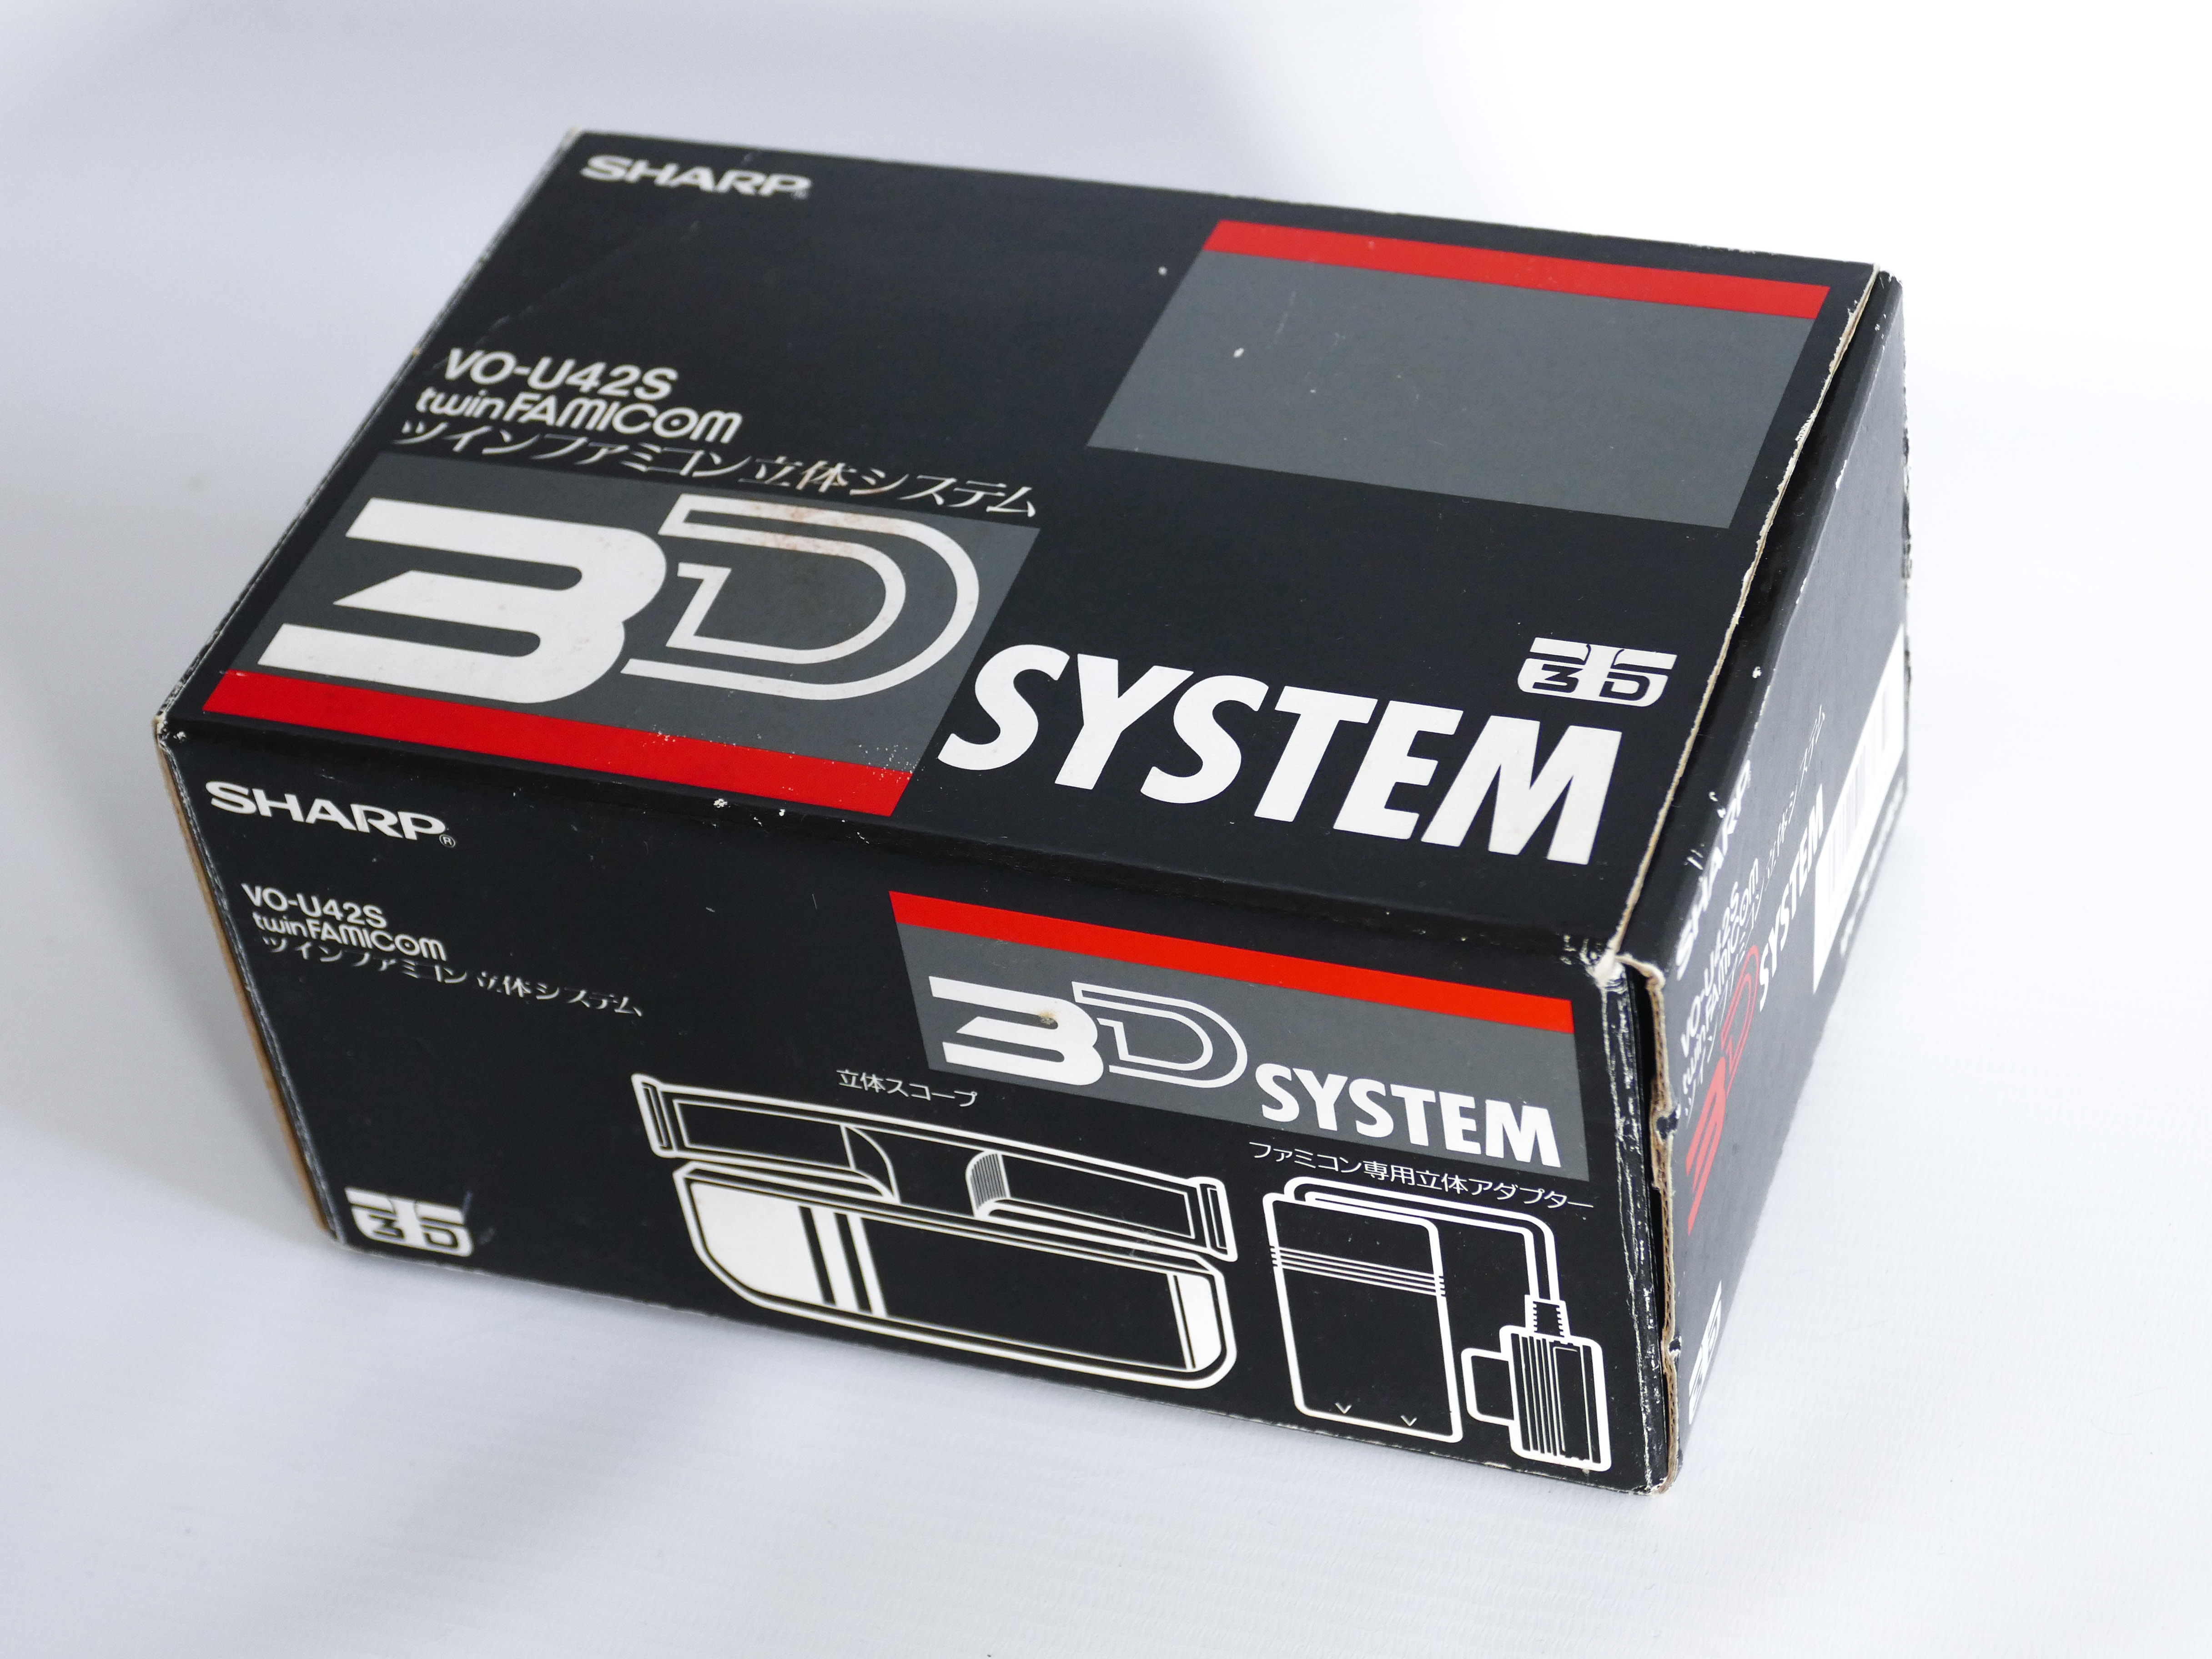 NINTENDO FAMICOM SHARP 3D SYSTEM VIRTUAL REALITY HEADSET VINTAGE COMPUTER GAME ACCESSORY JAPAN NES